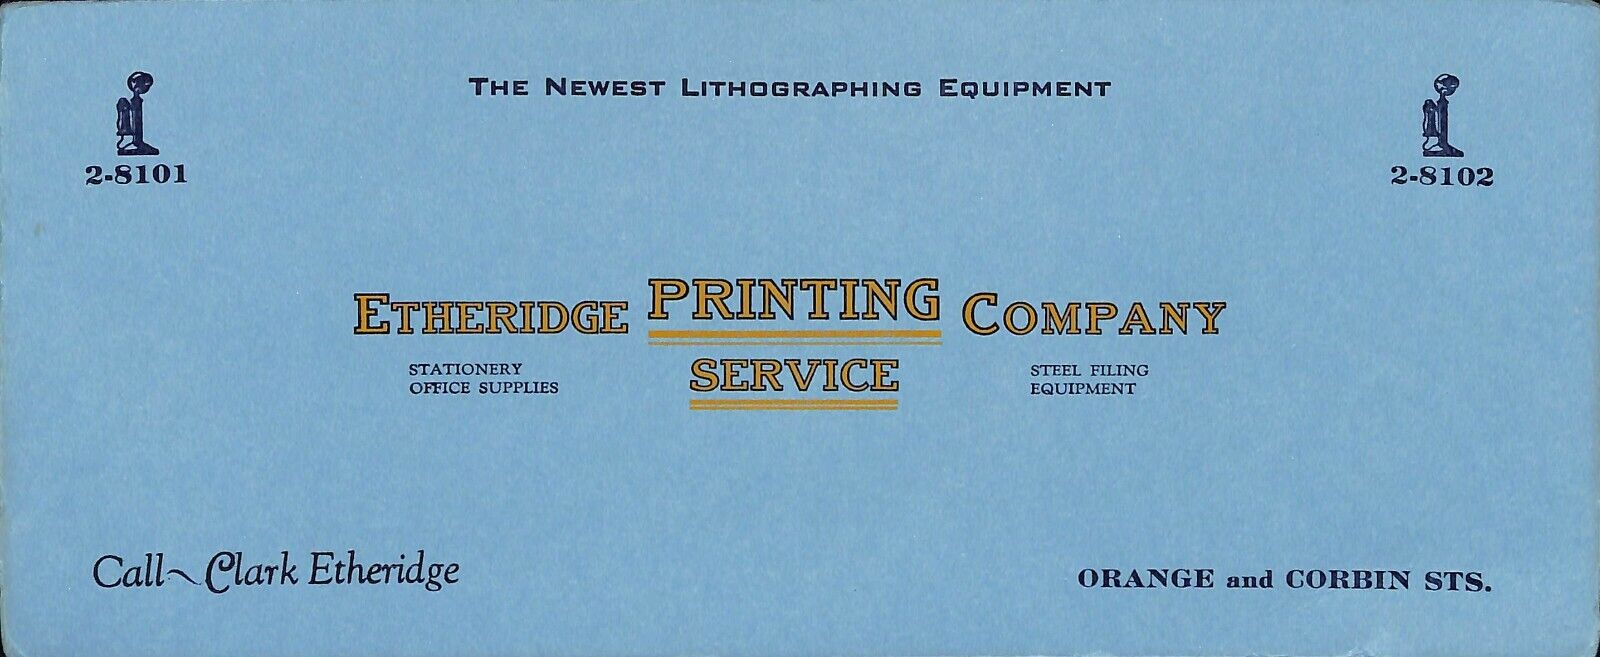 Etheridge Printing Company Supplies Service  Advertising Ink Blotter